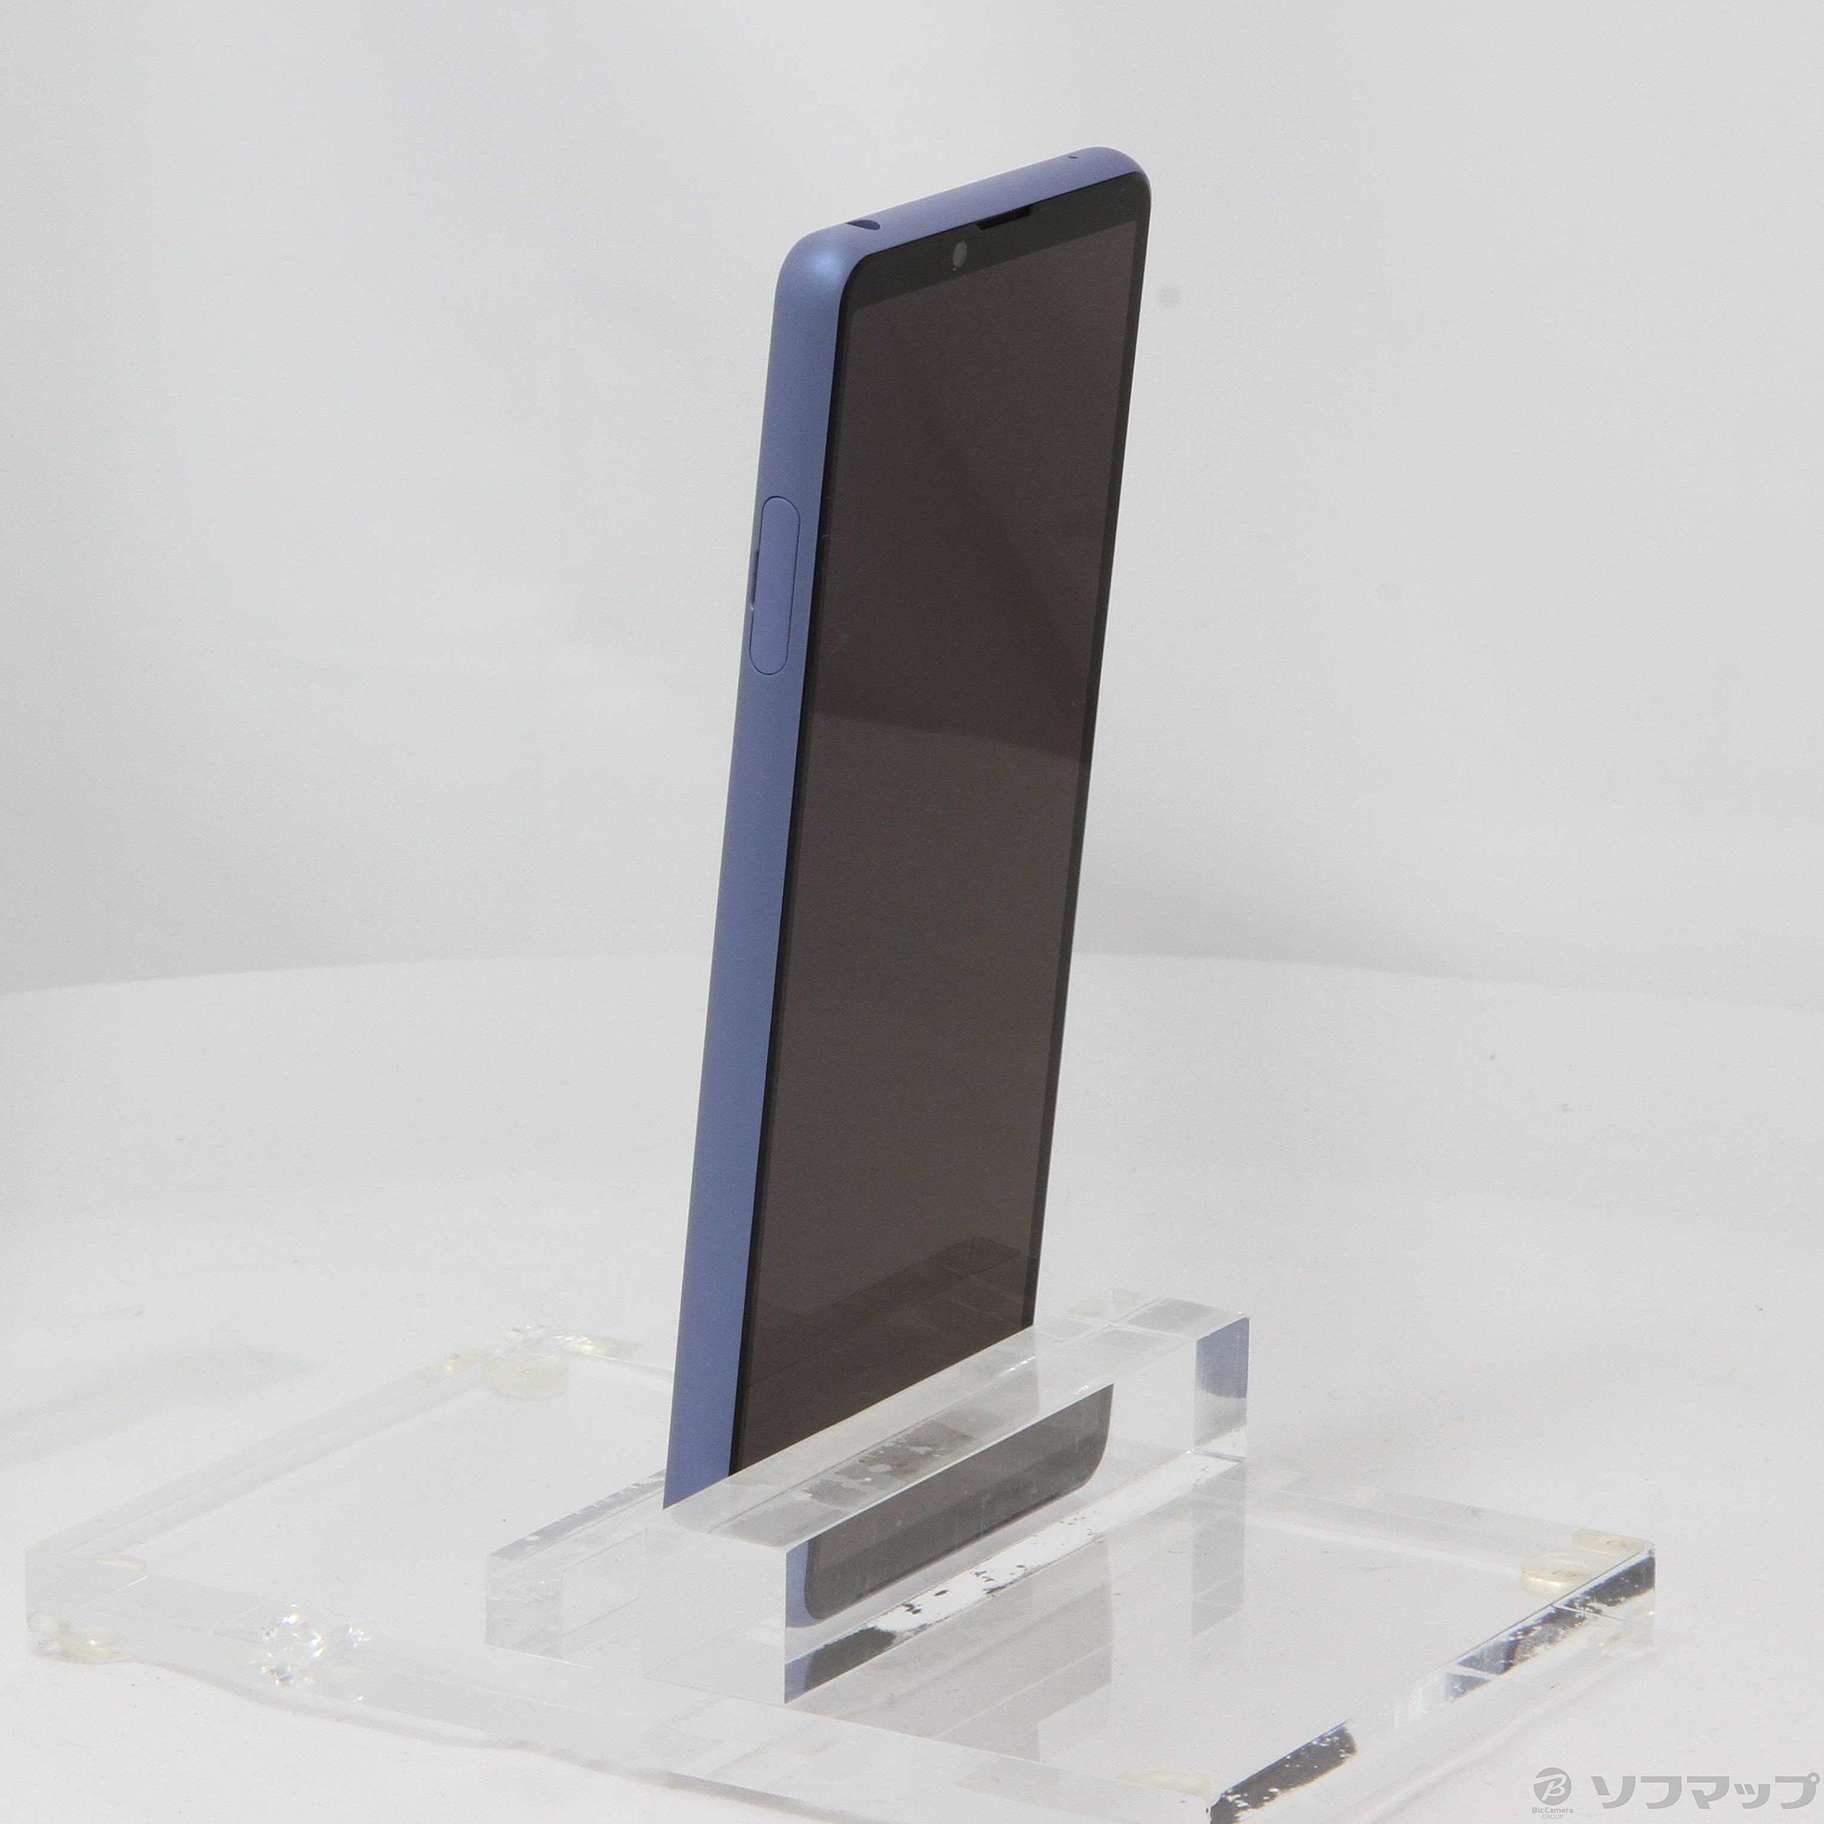 Xperia 10 III 128GB ブルー SOSAR3 Y!mobile 〔ネットワーク利用制限▲〕